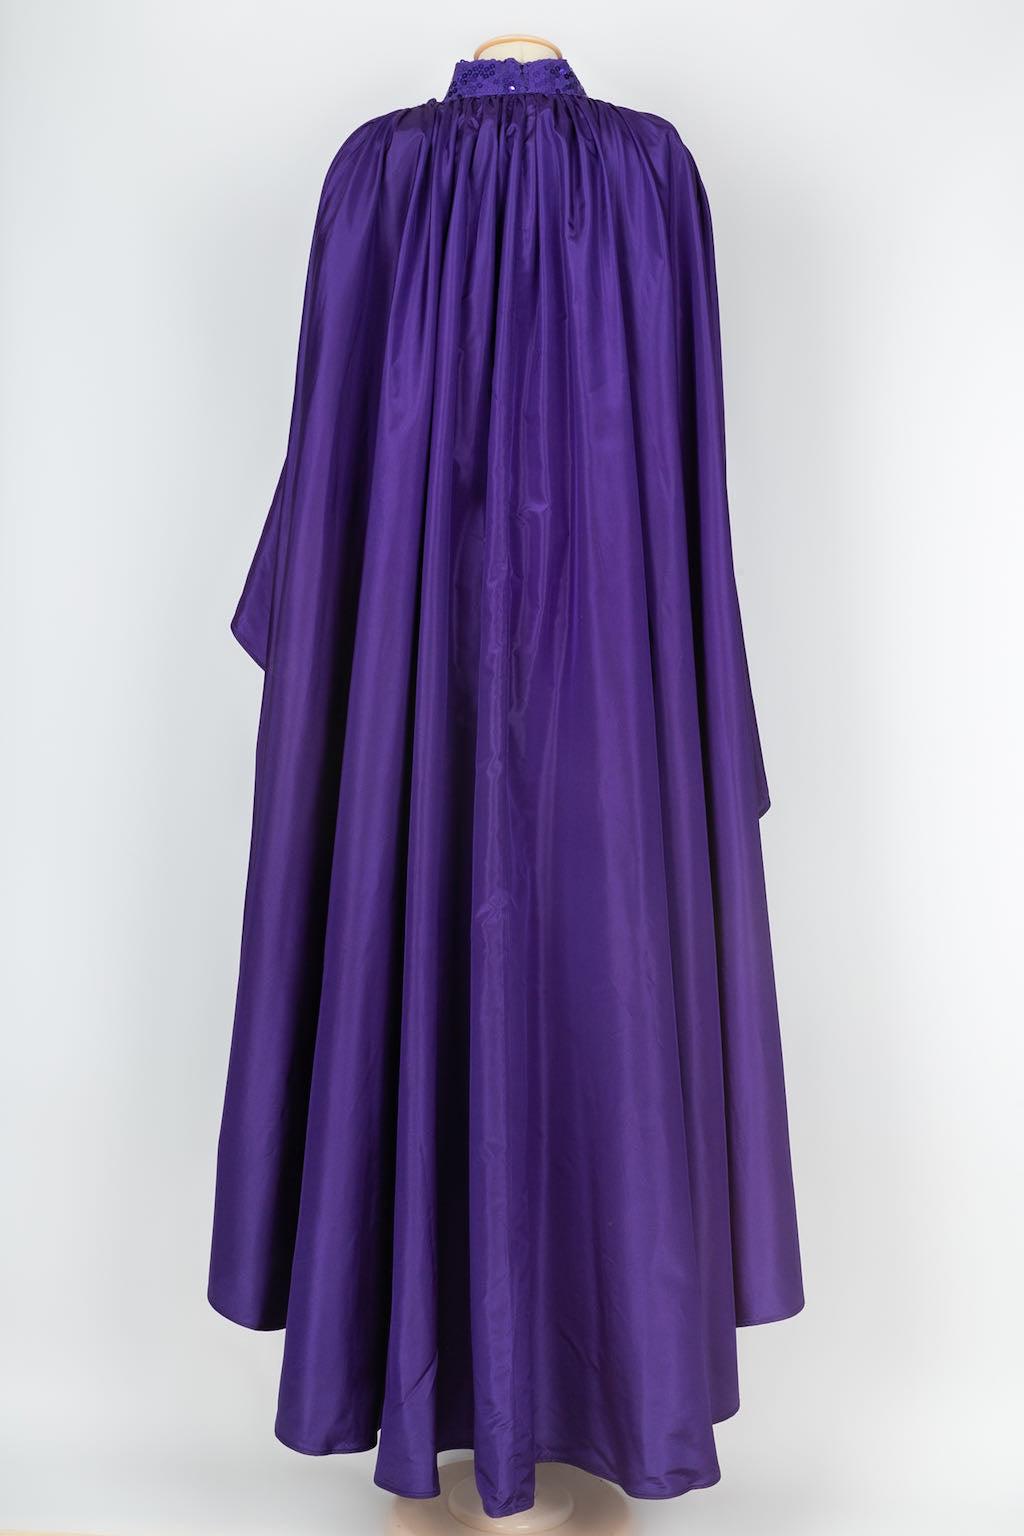 Azzaro Evening Taffeta Cape Embroidered Dress, Size 40FR 7